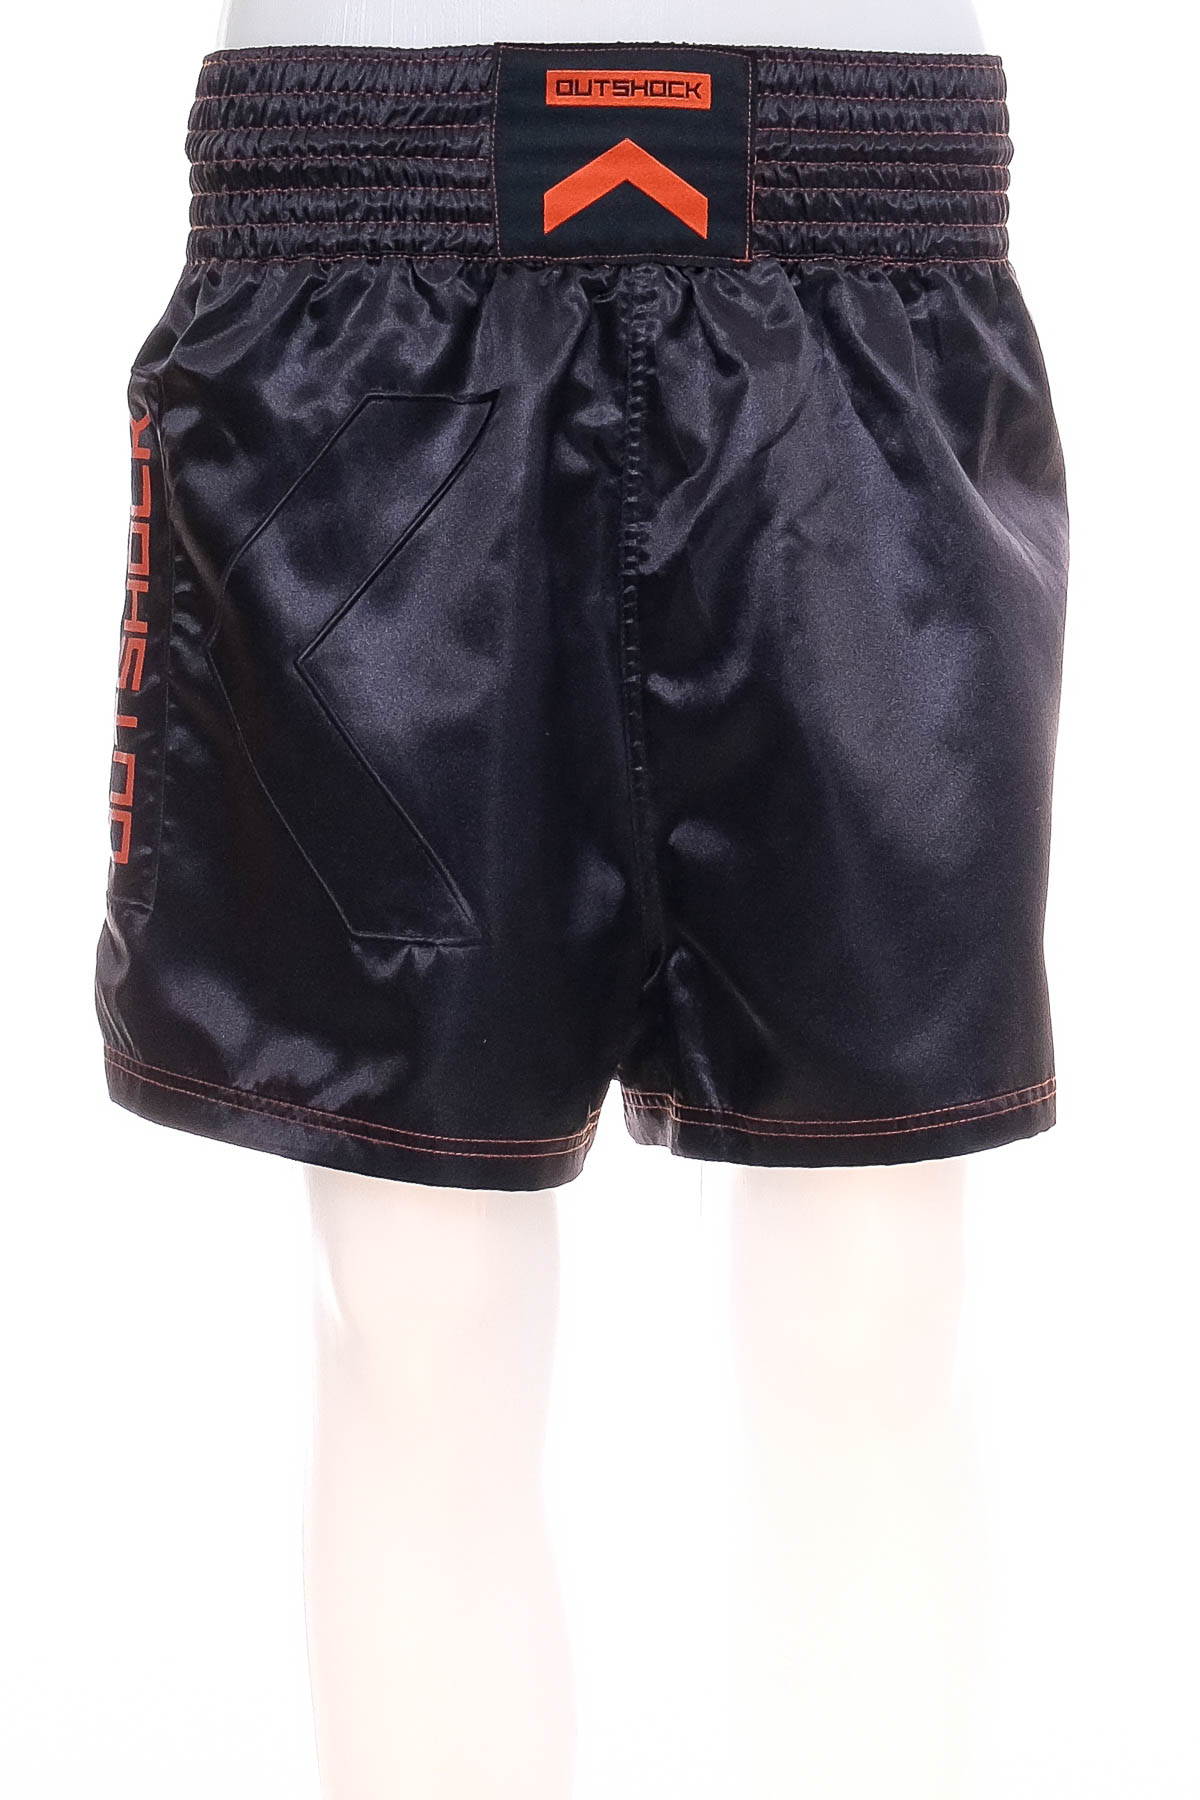 Men's shorts - DECATHLON - 0